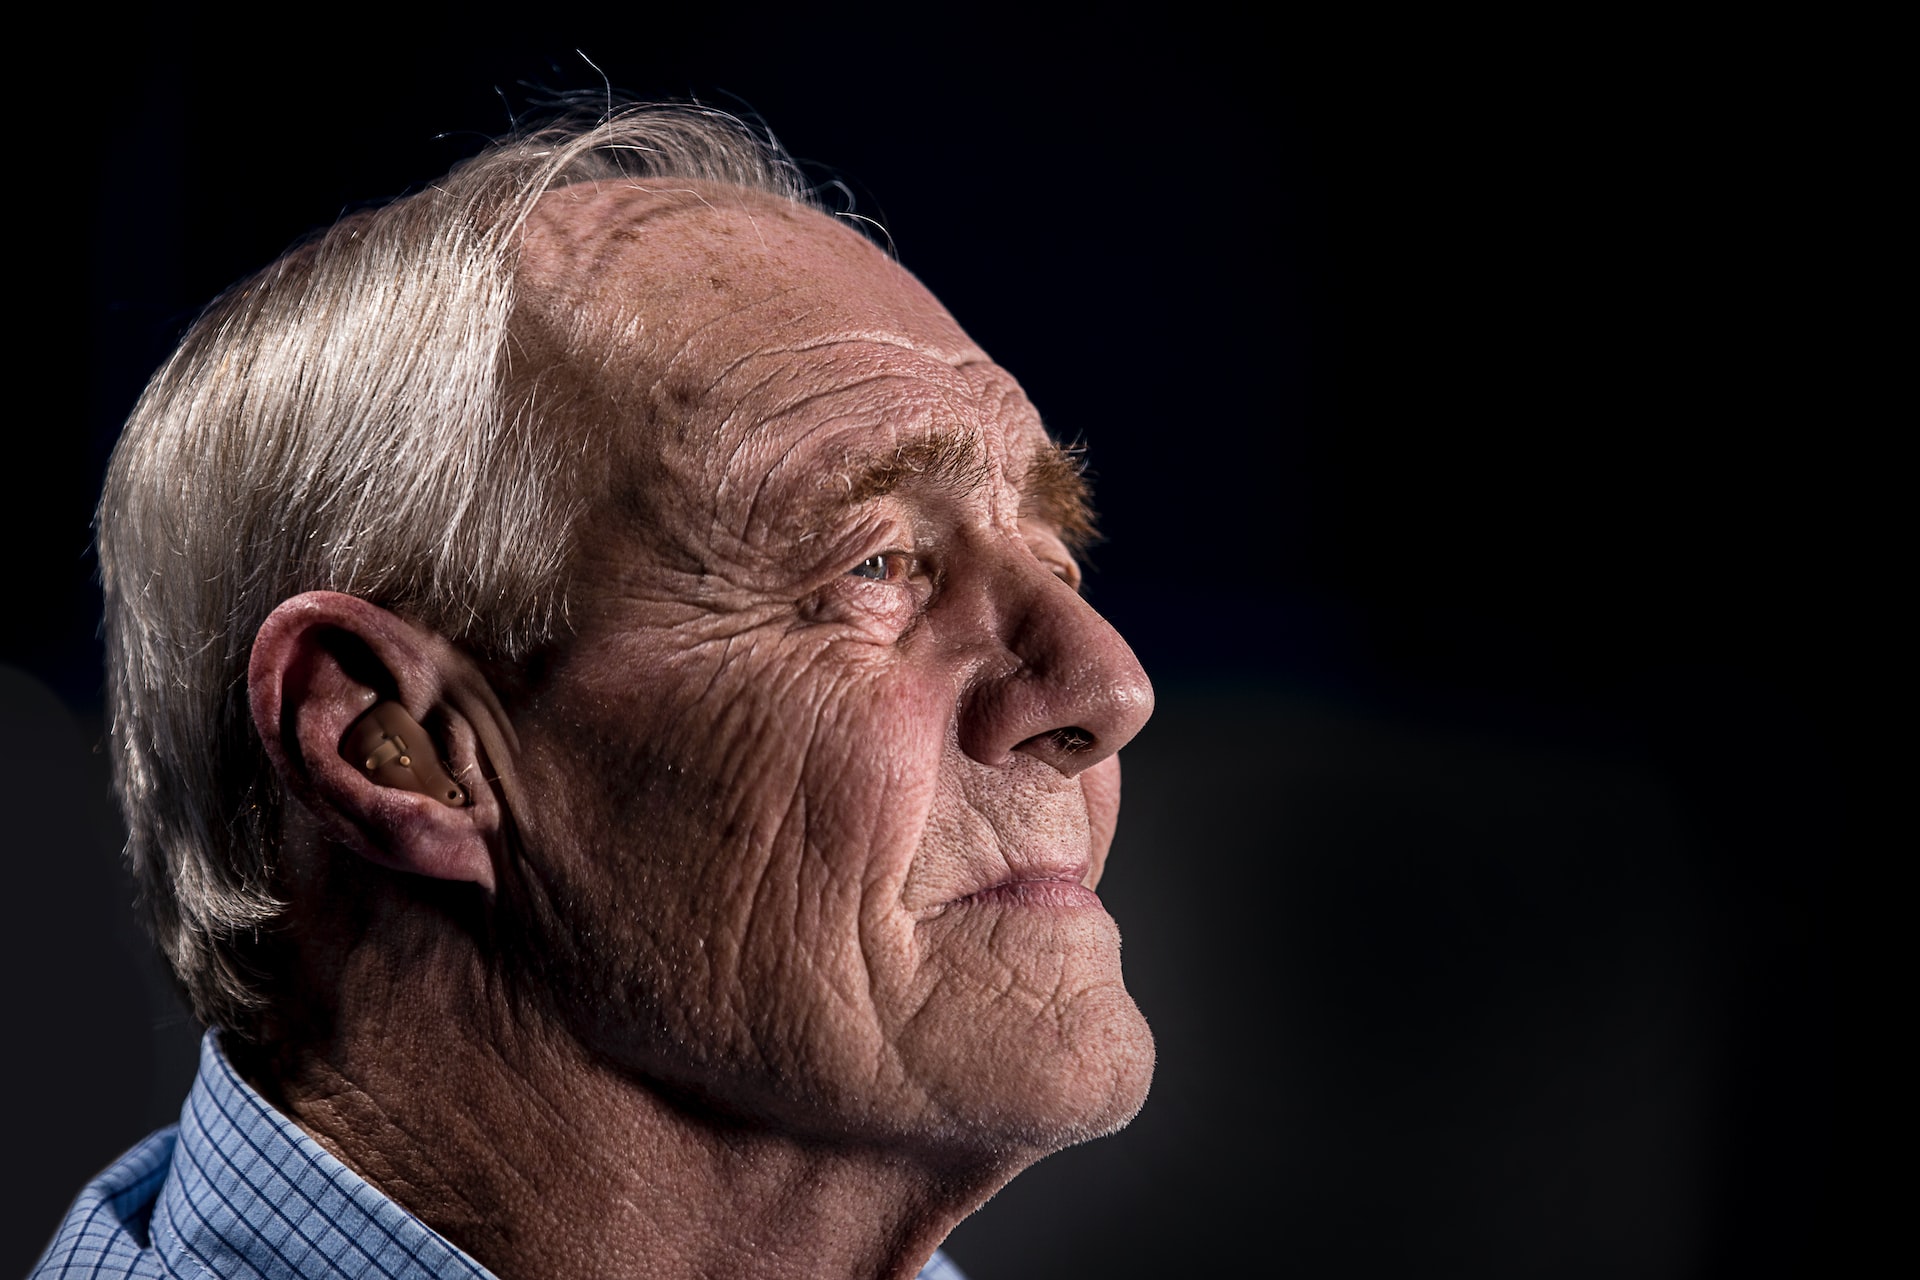 Nova e surpreendente teoria pode decifrar o que provoca o Alzheimer